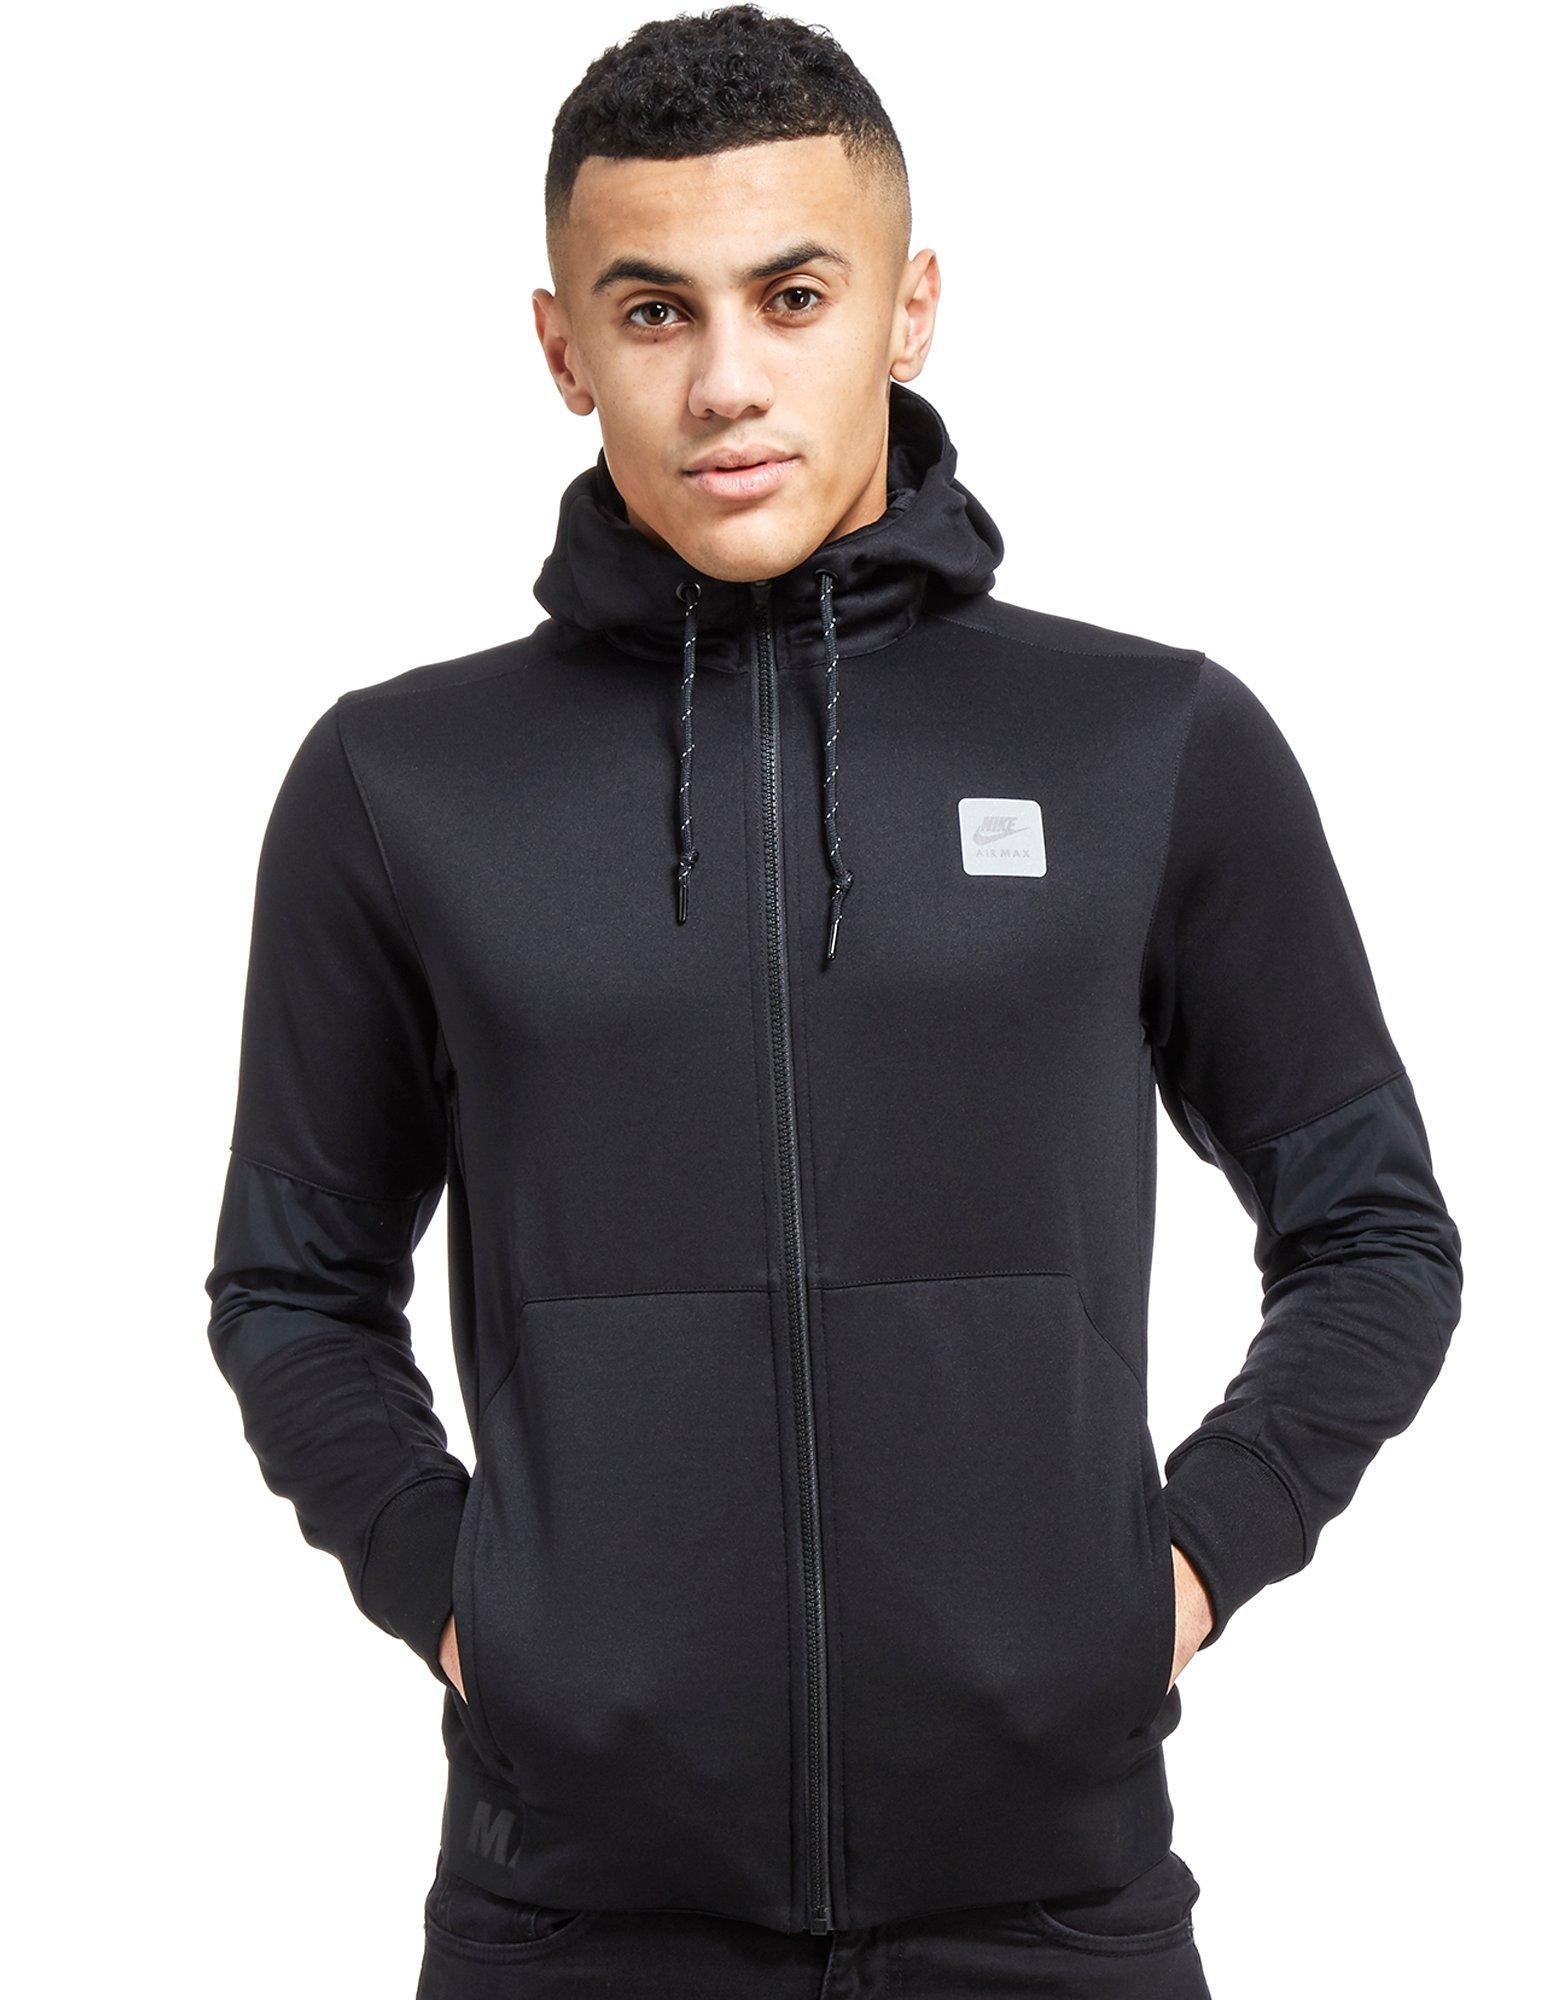 Nike Synthetic Air Max Full Zip Hoody in Black for Men - Lyst